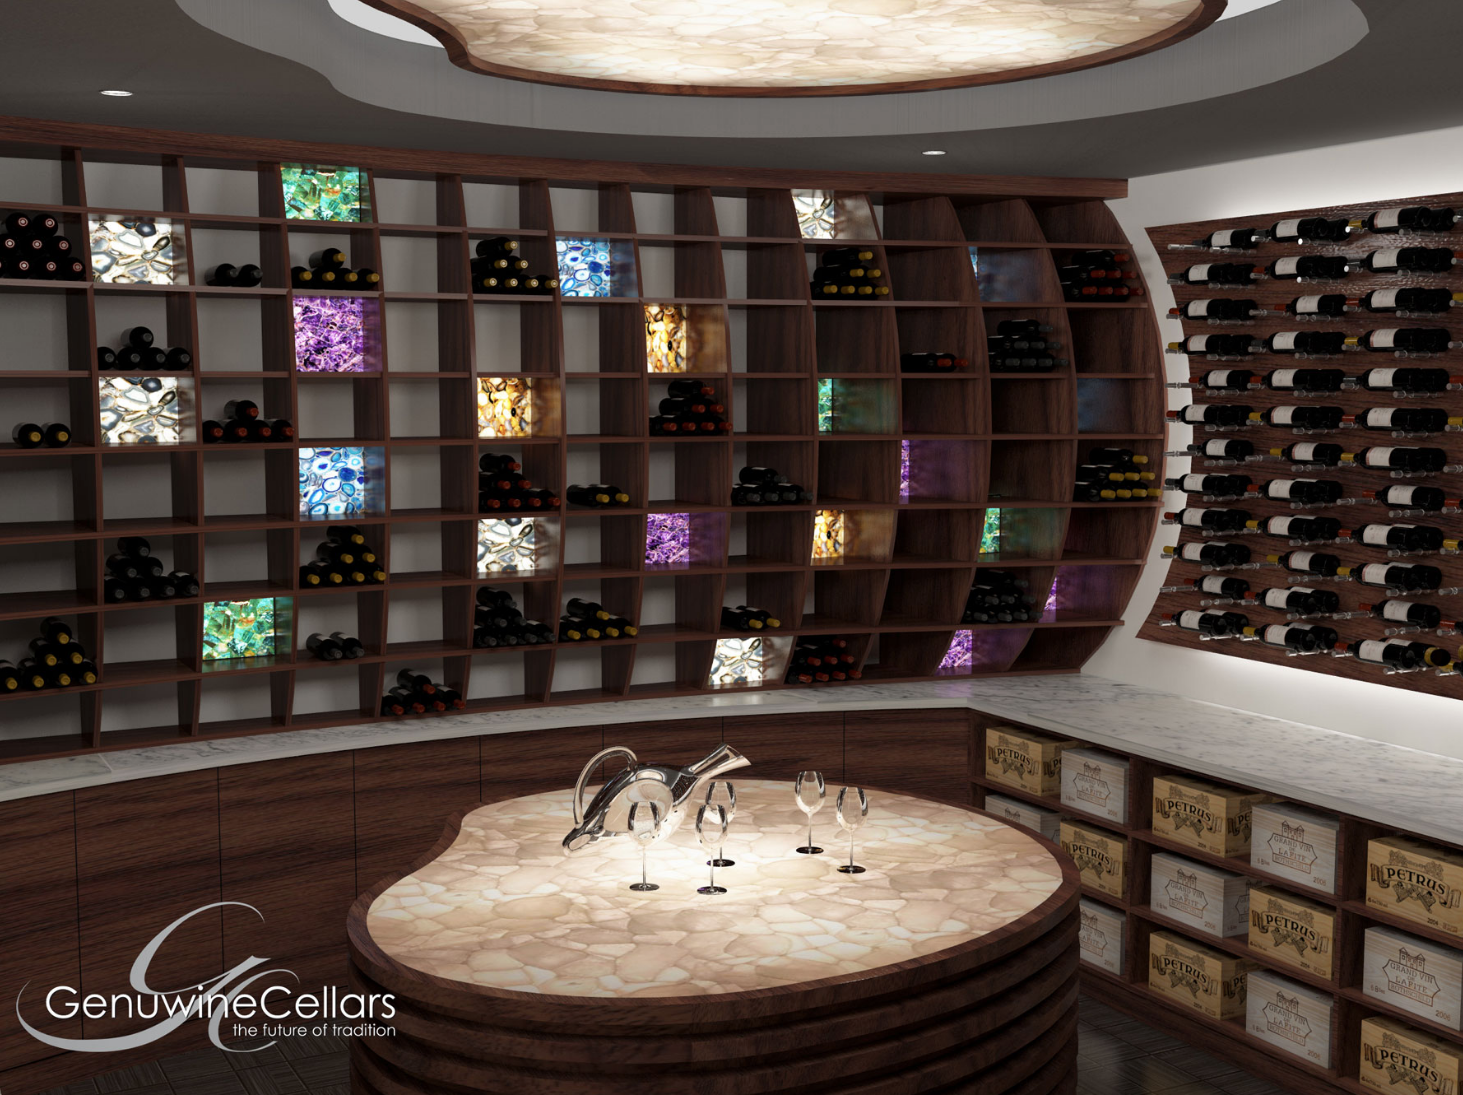 Genuwine Cellars Architectural Series Custom Wine Cellars The Ultimate Wine Storage Solutions for Luxury Homes